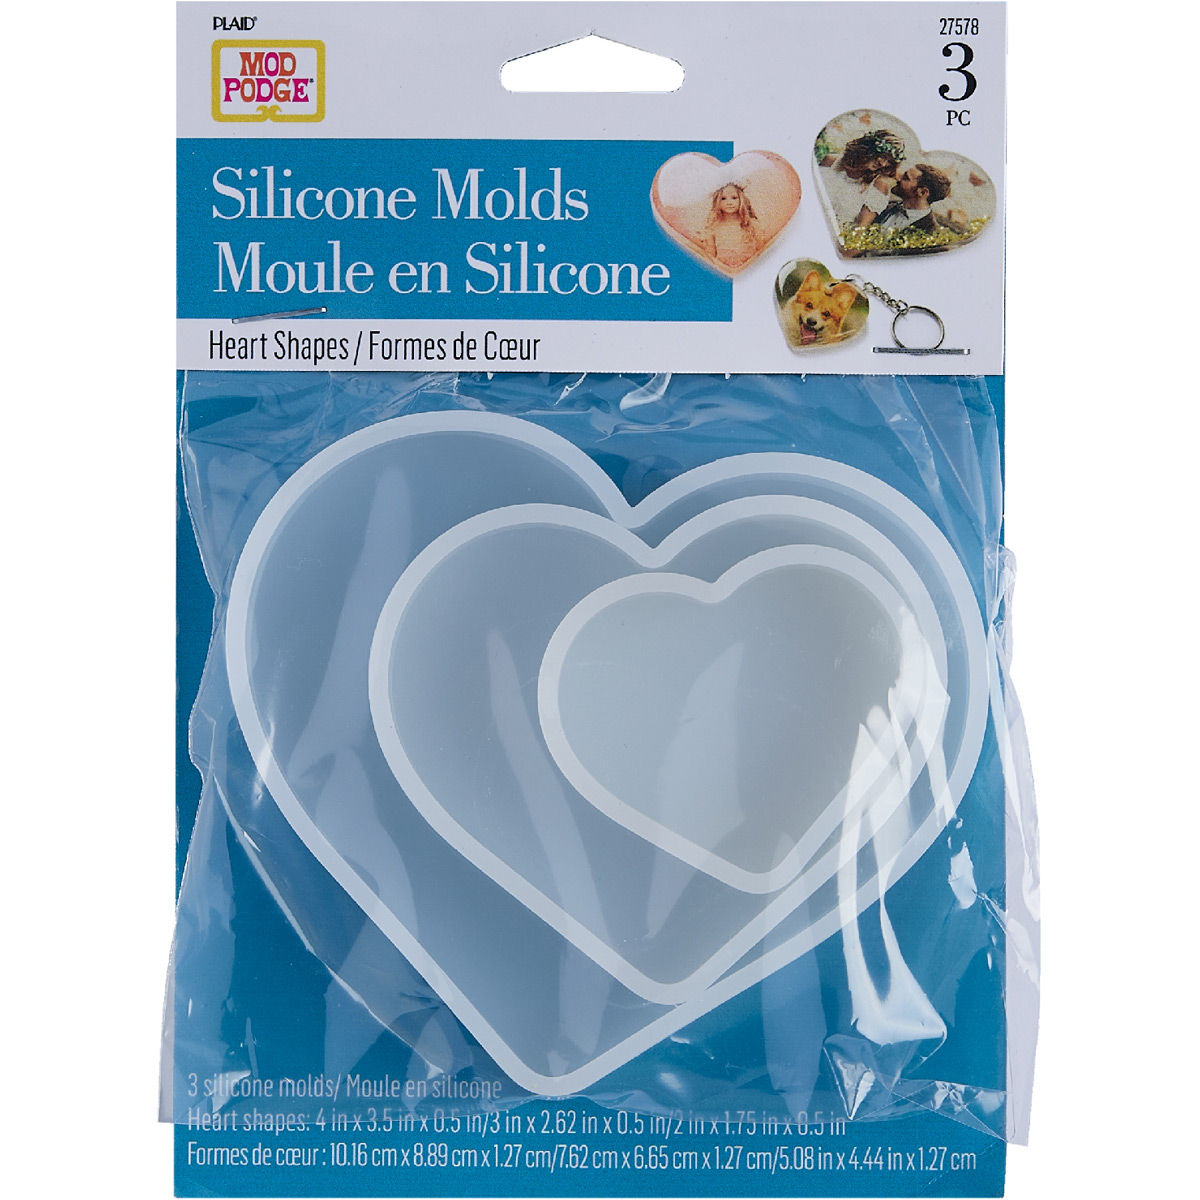 Shop Plaid Mod Podge ® Silicone Molds - Hearts, 3 pc. - 27578 - 27578